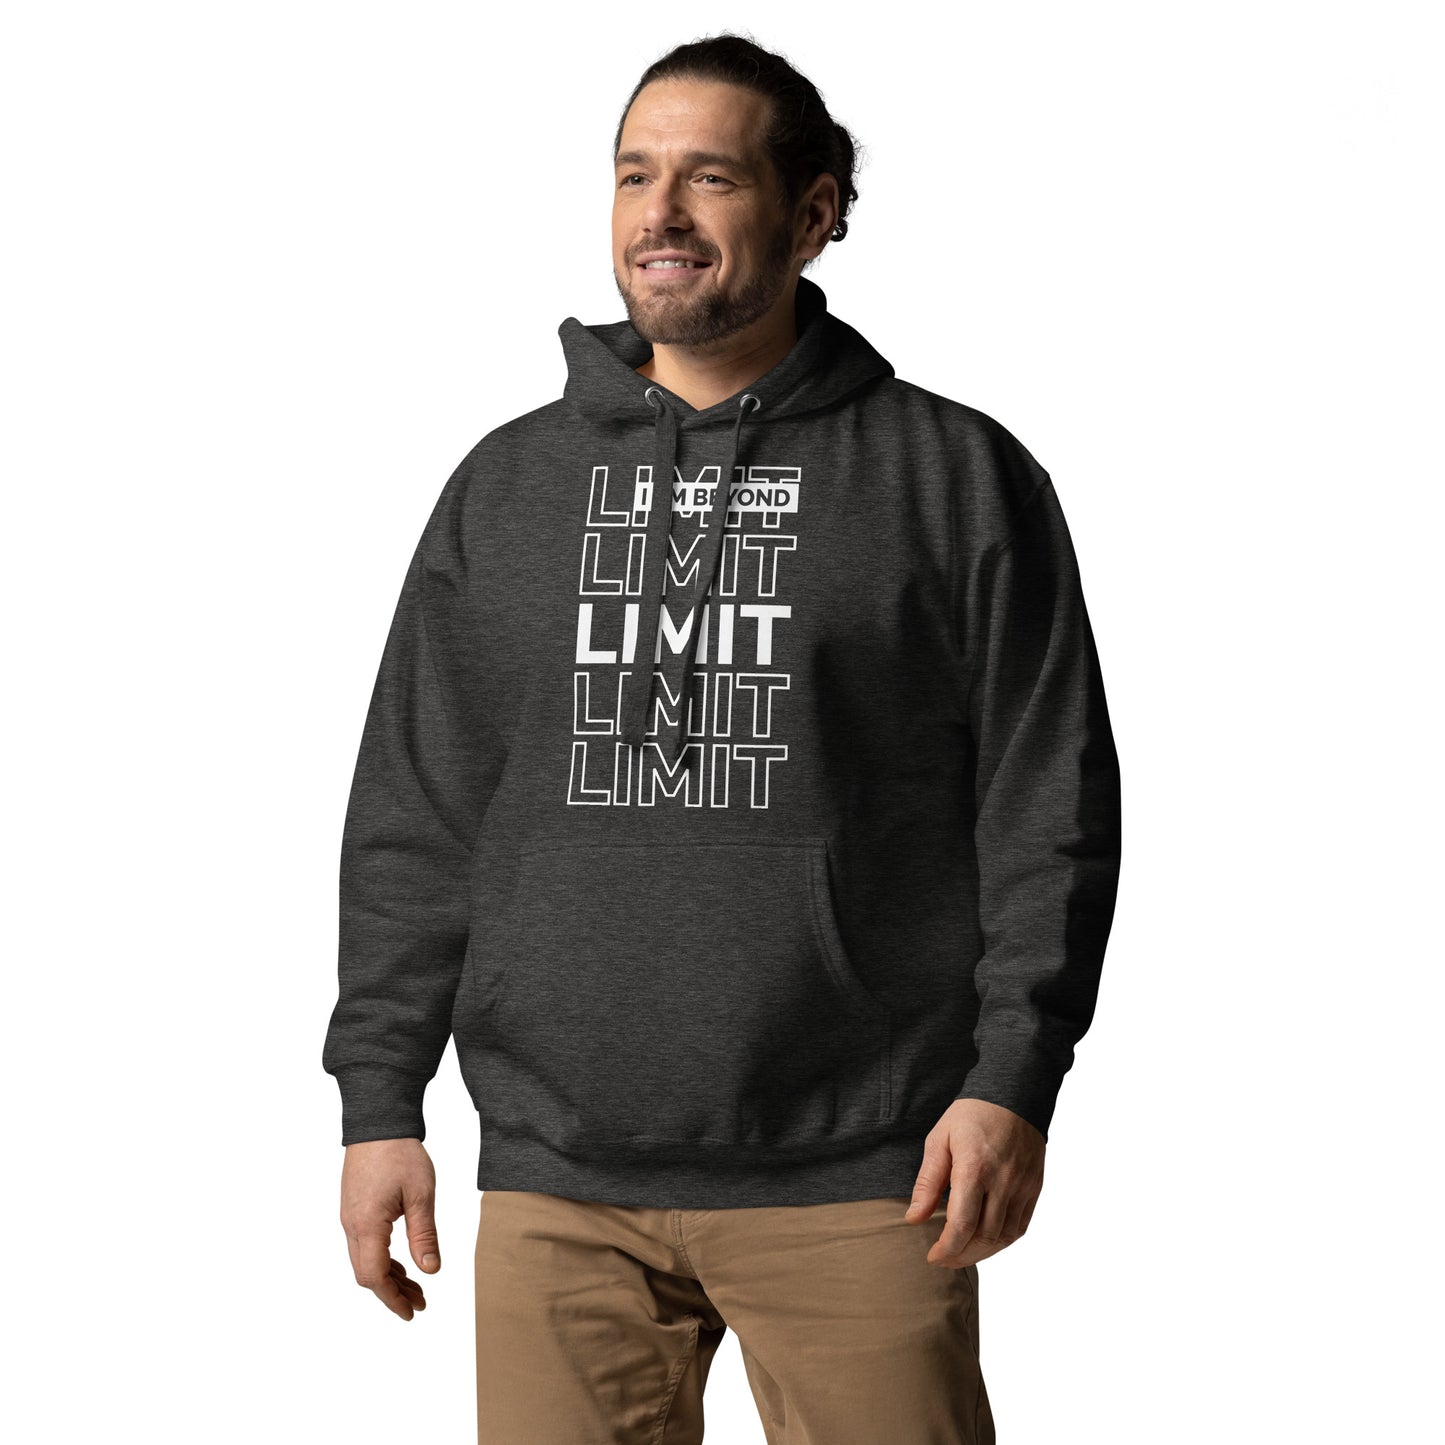 I am beyond Limit - Ultimate Comfort Unisex Hoodie